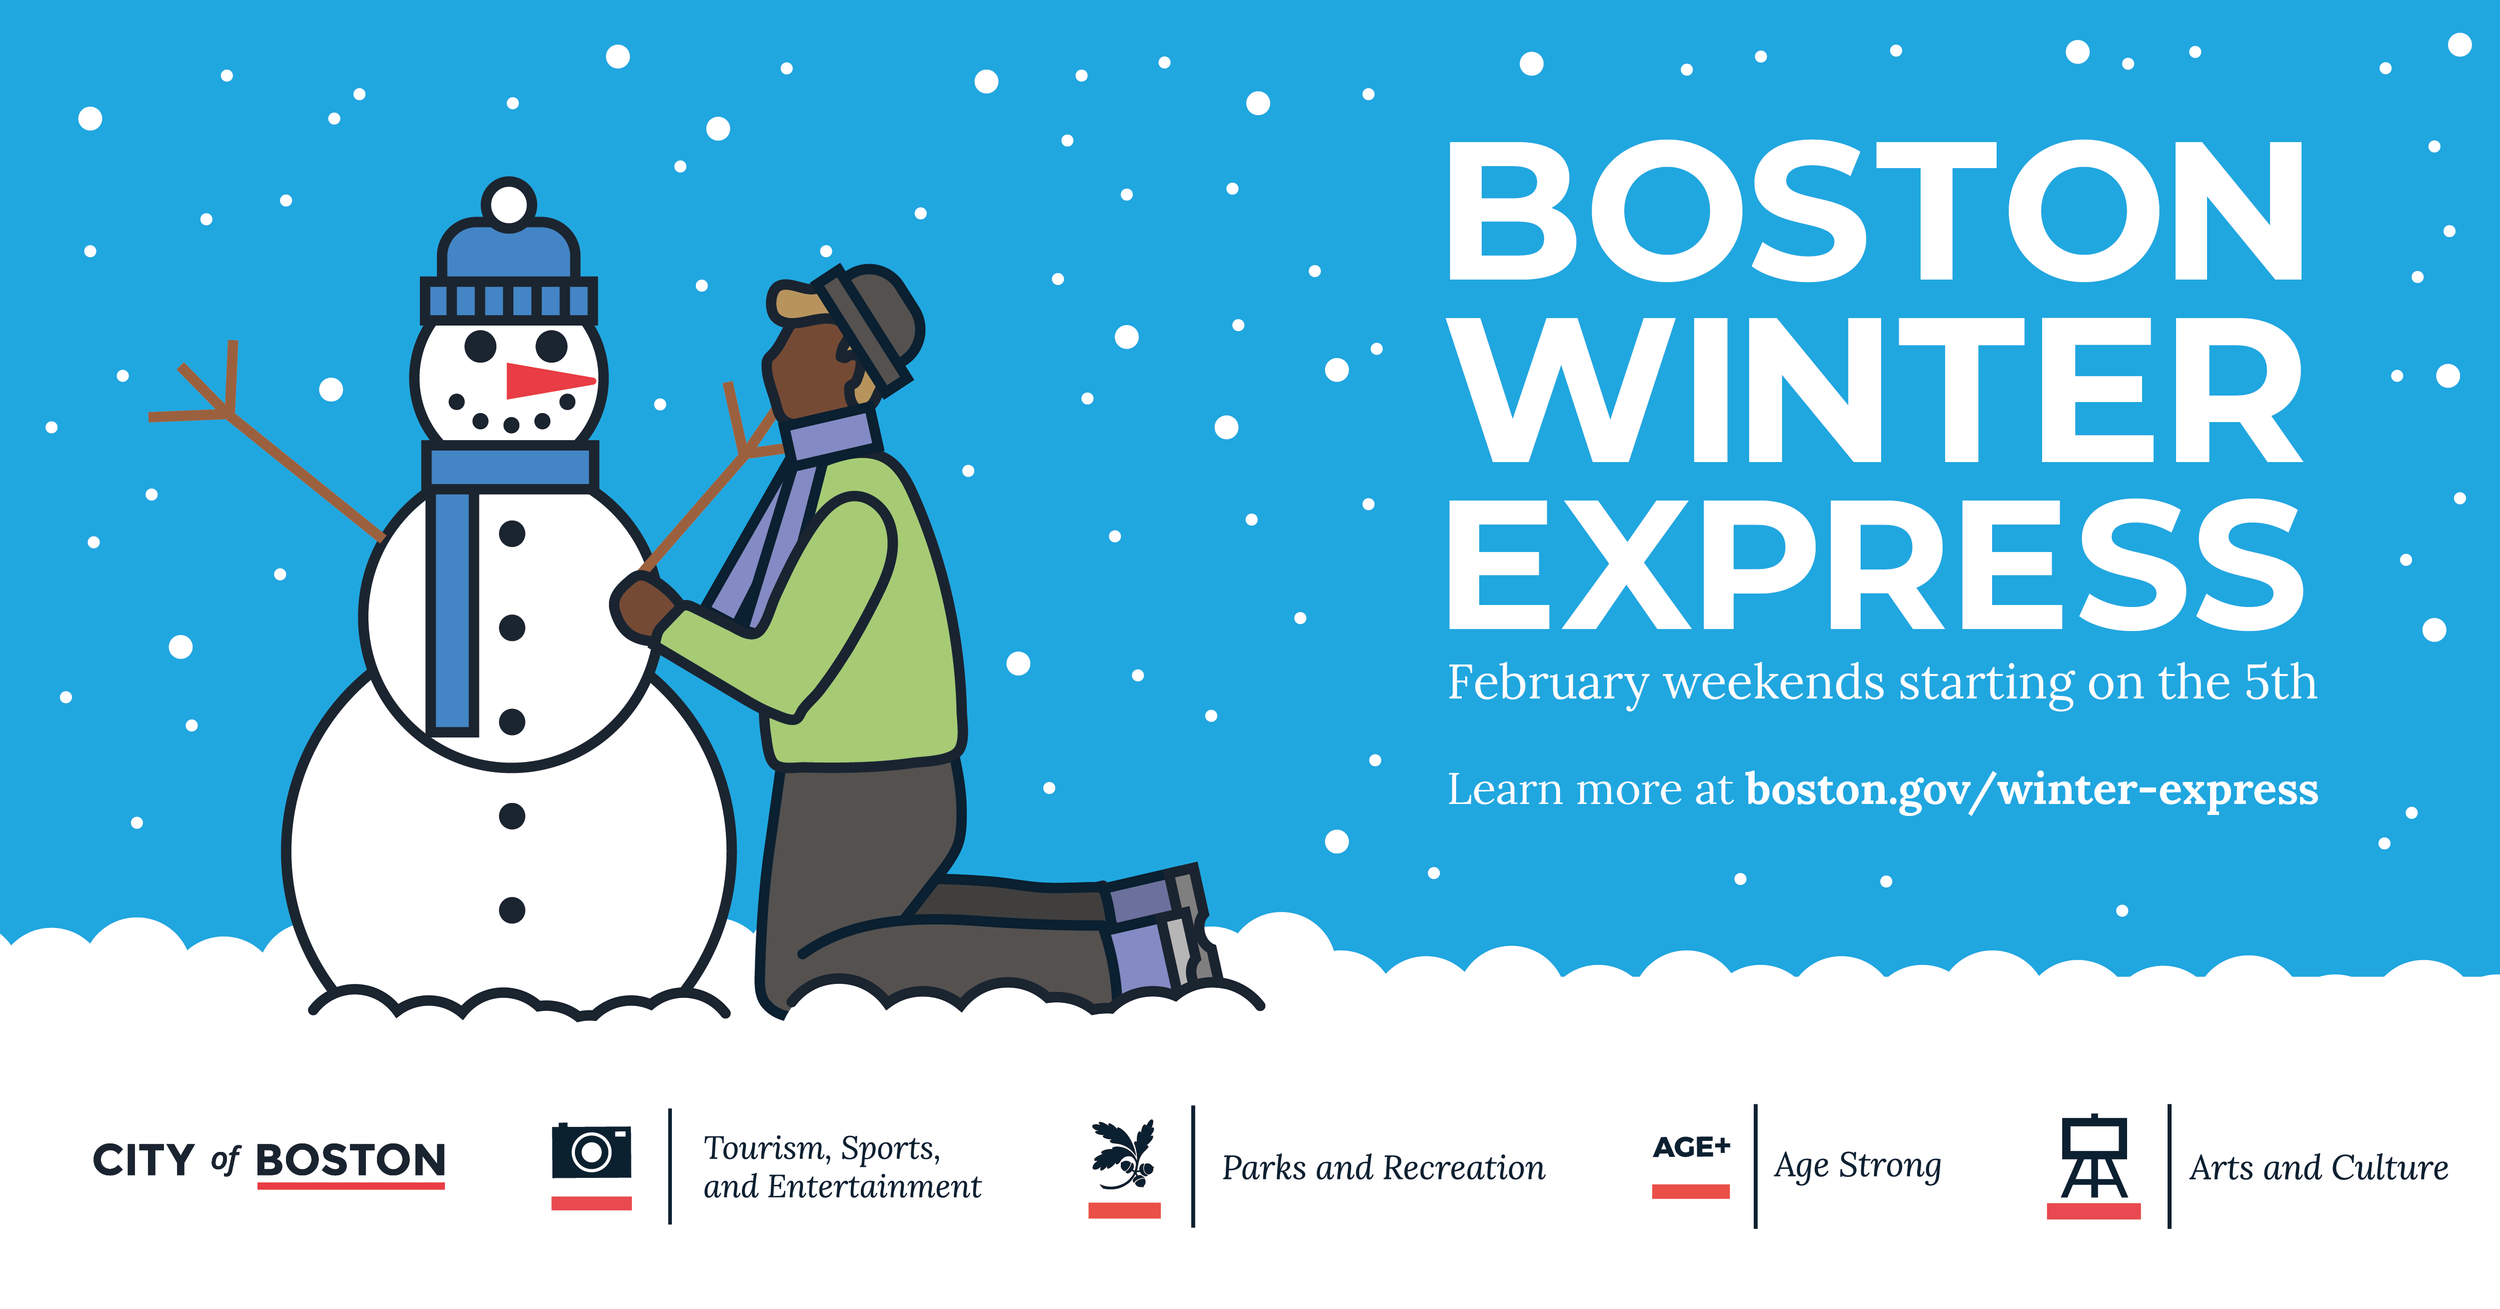 2137-boston winter express_2137-03-winter-express-bos-fb-2.png